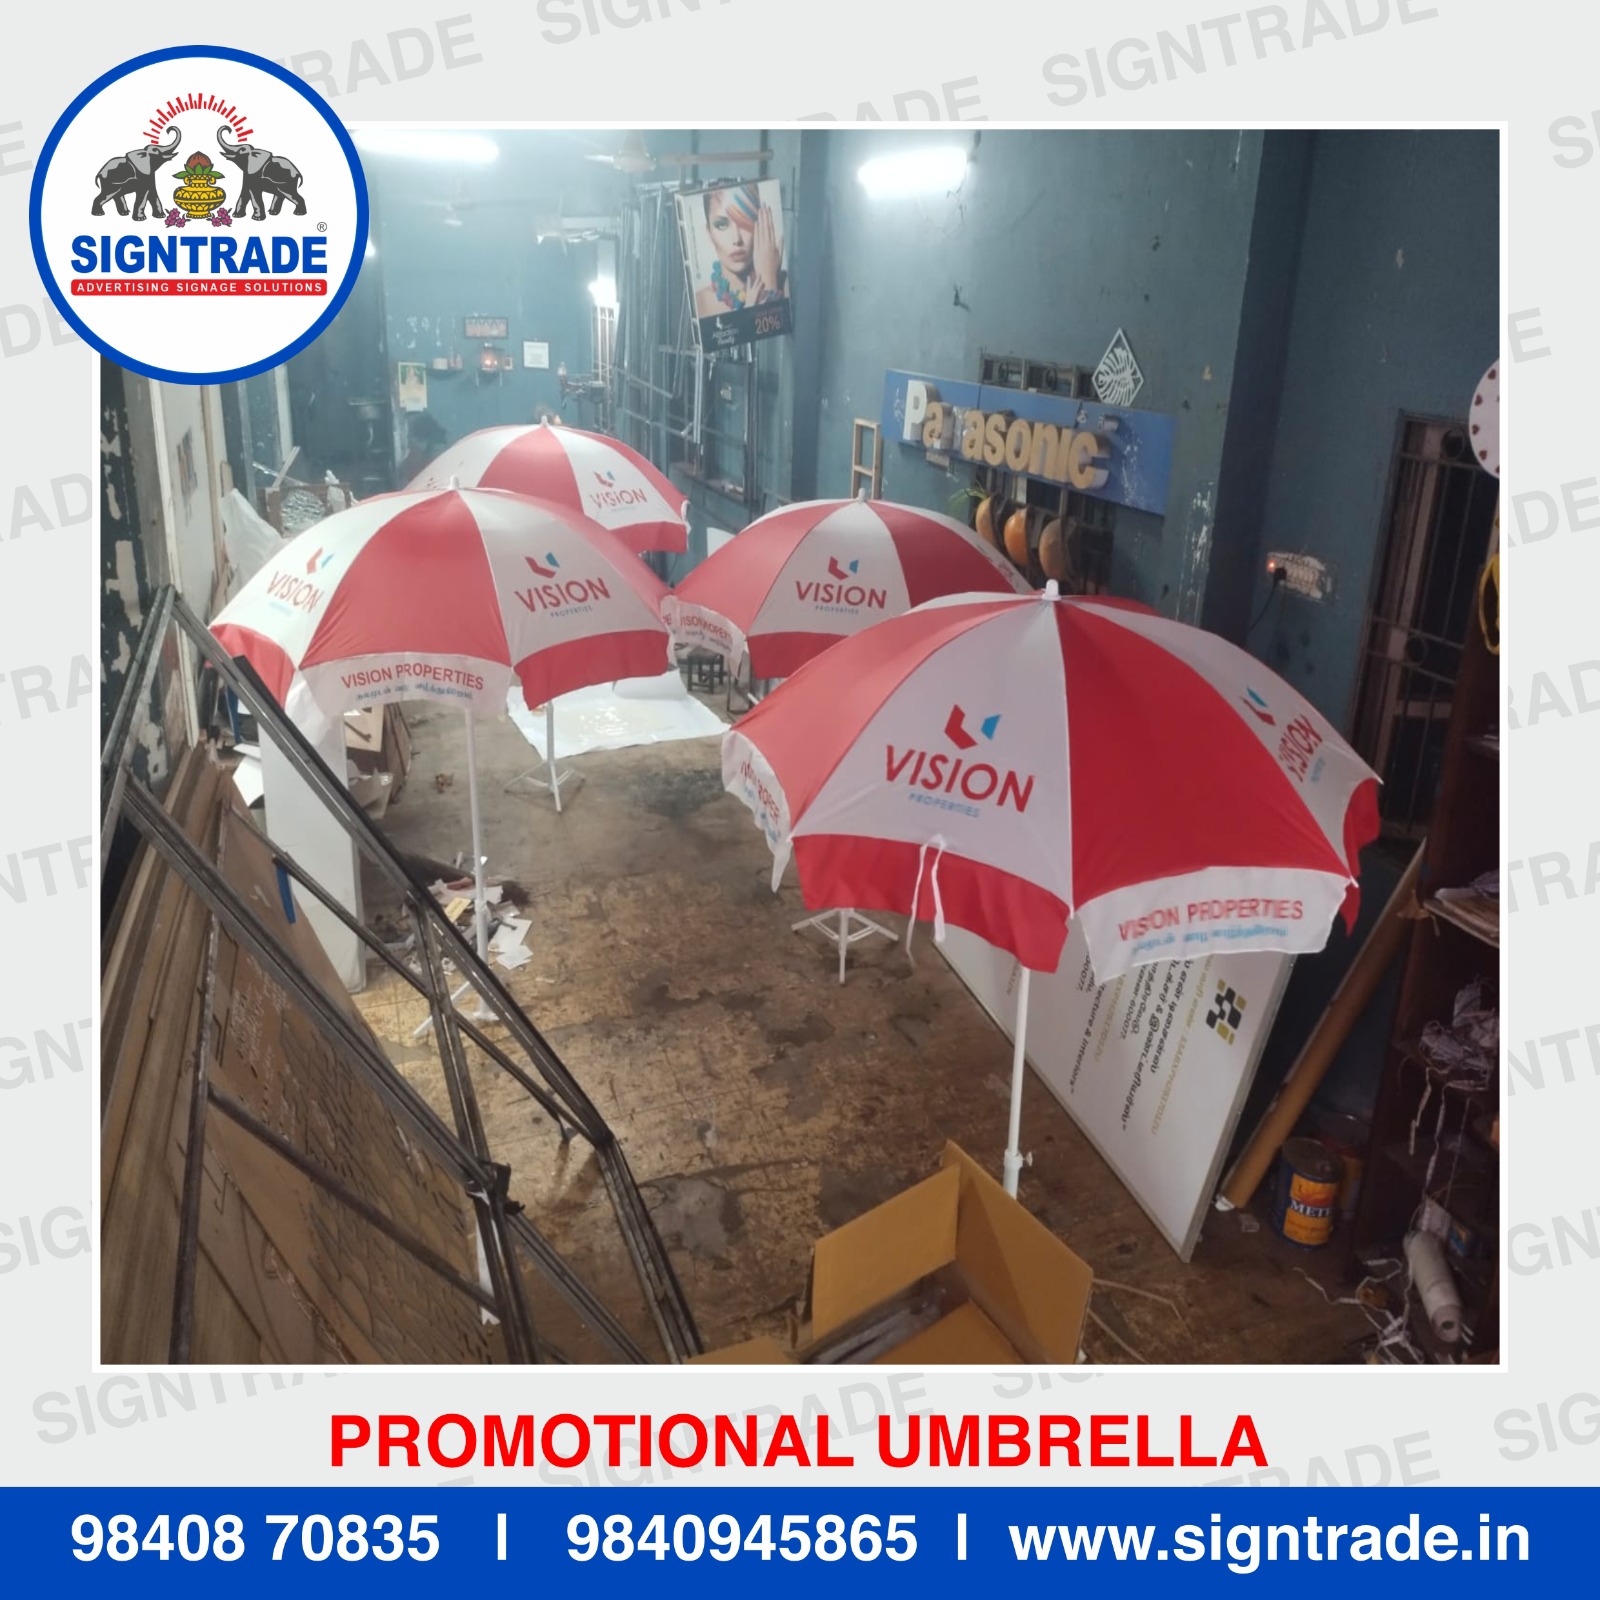 Promotional Umbrella in Chennai, Tamil Nadu